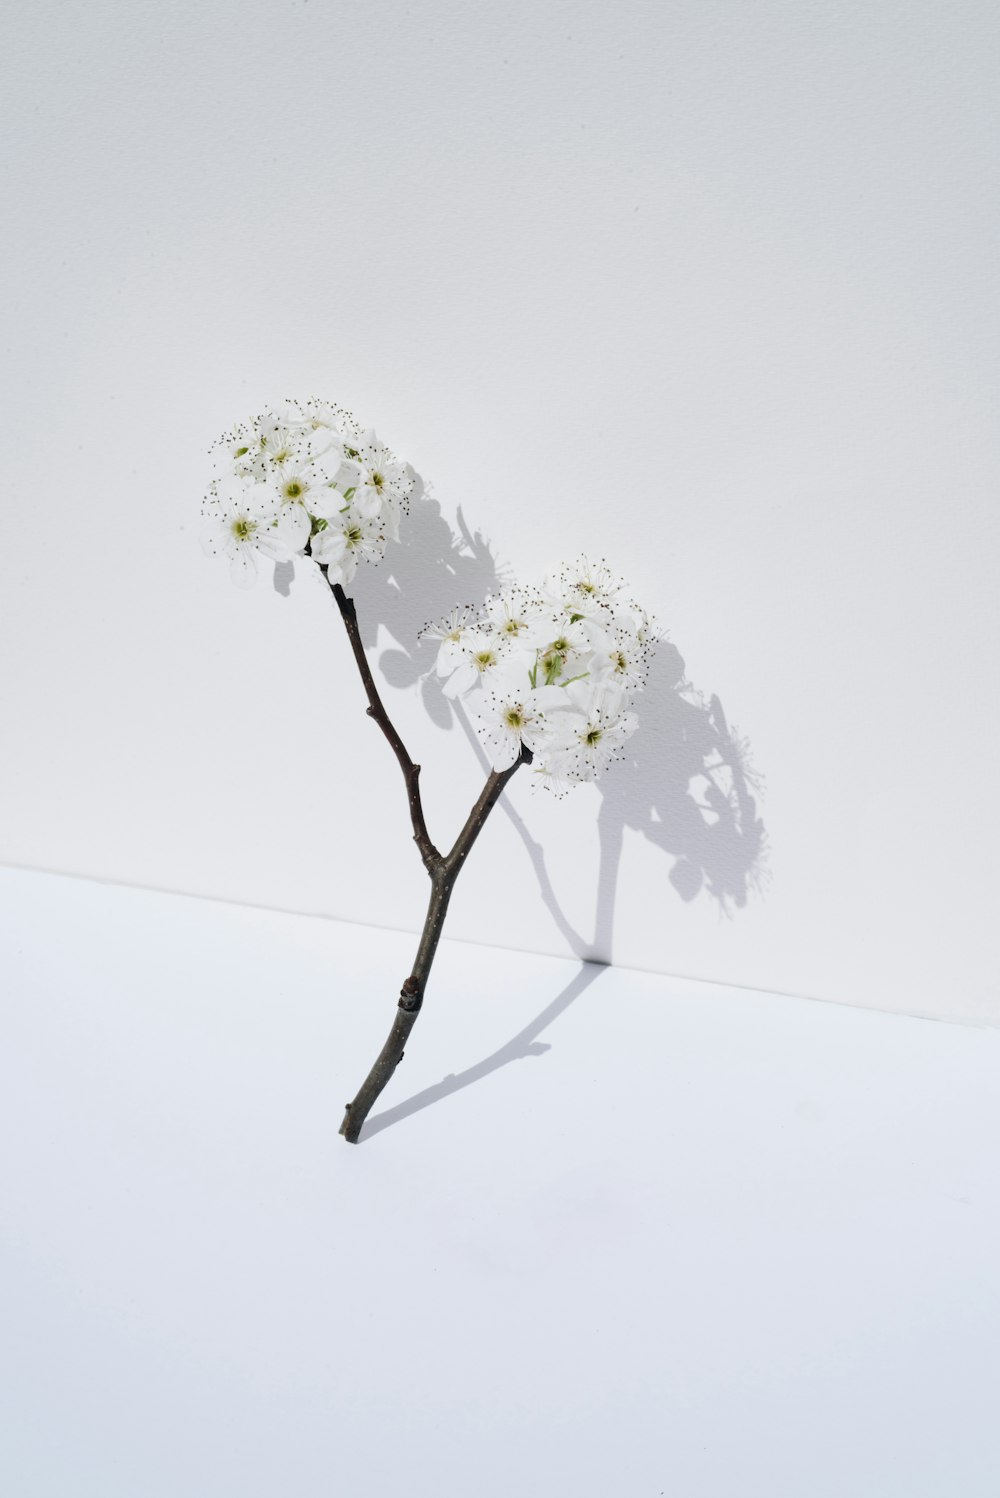 a white flower on a stem